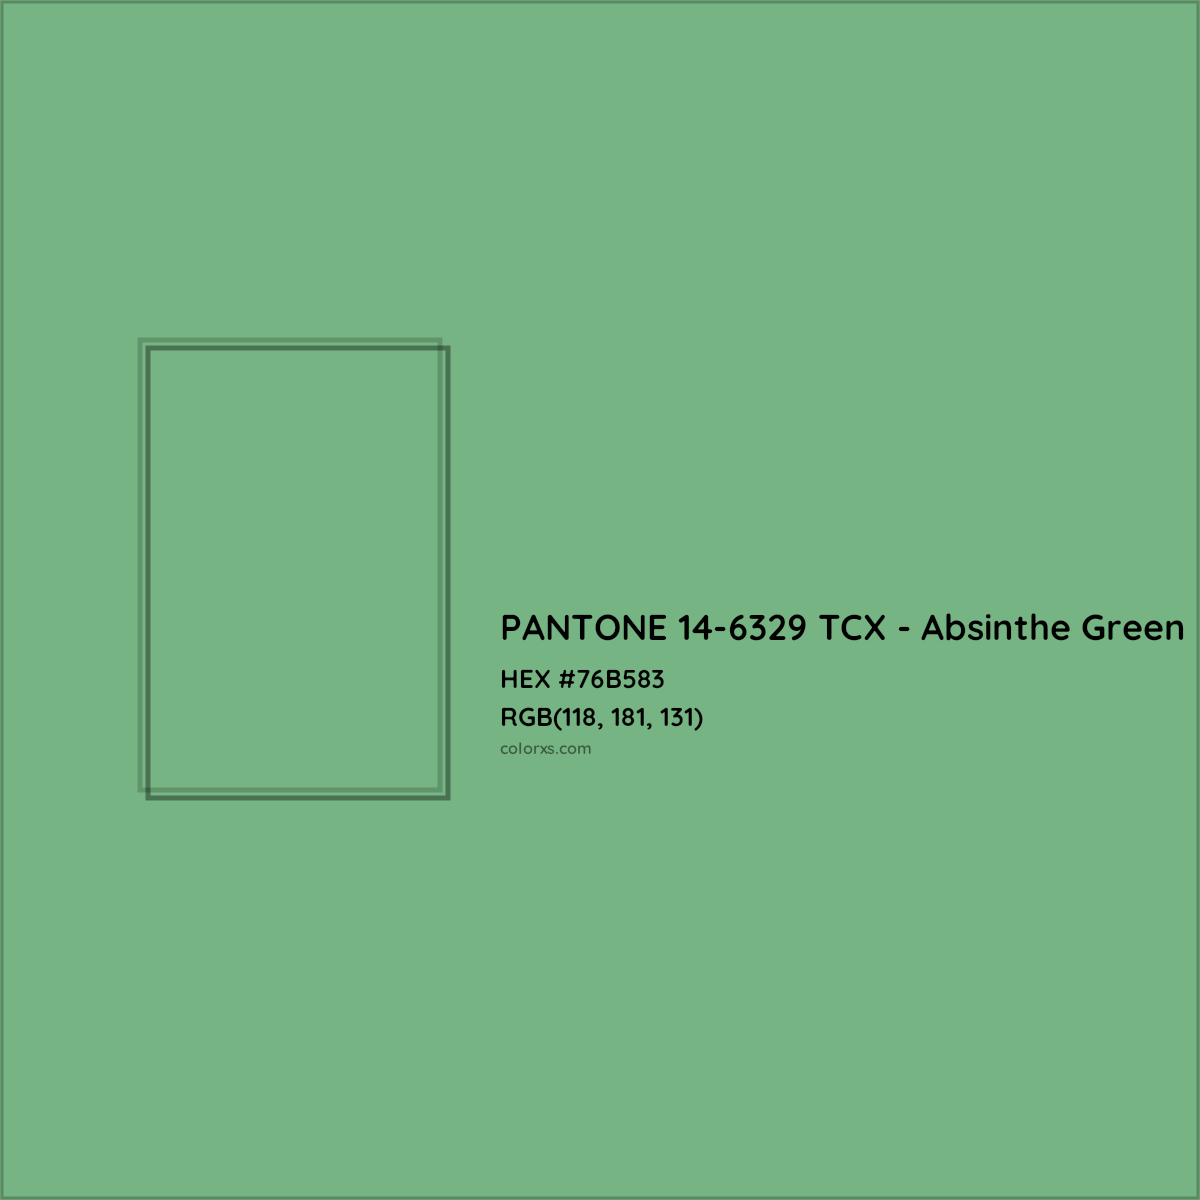 HEX #76B583 PANTONE 14-6329 TCX - Absinthe Green CMS Pantone TCX - Color Code